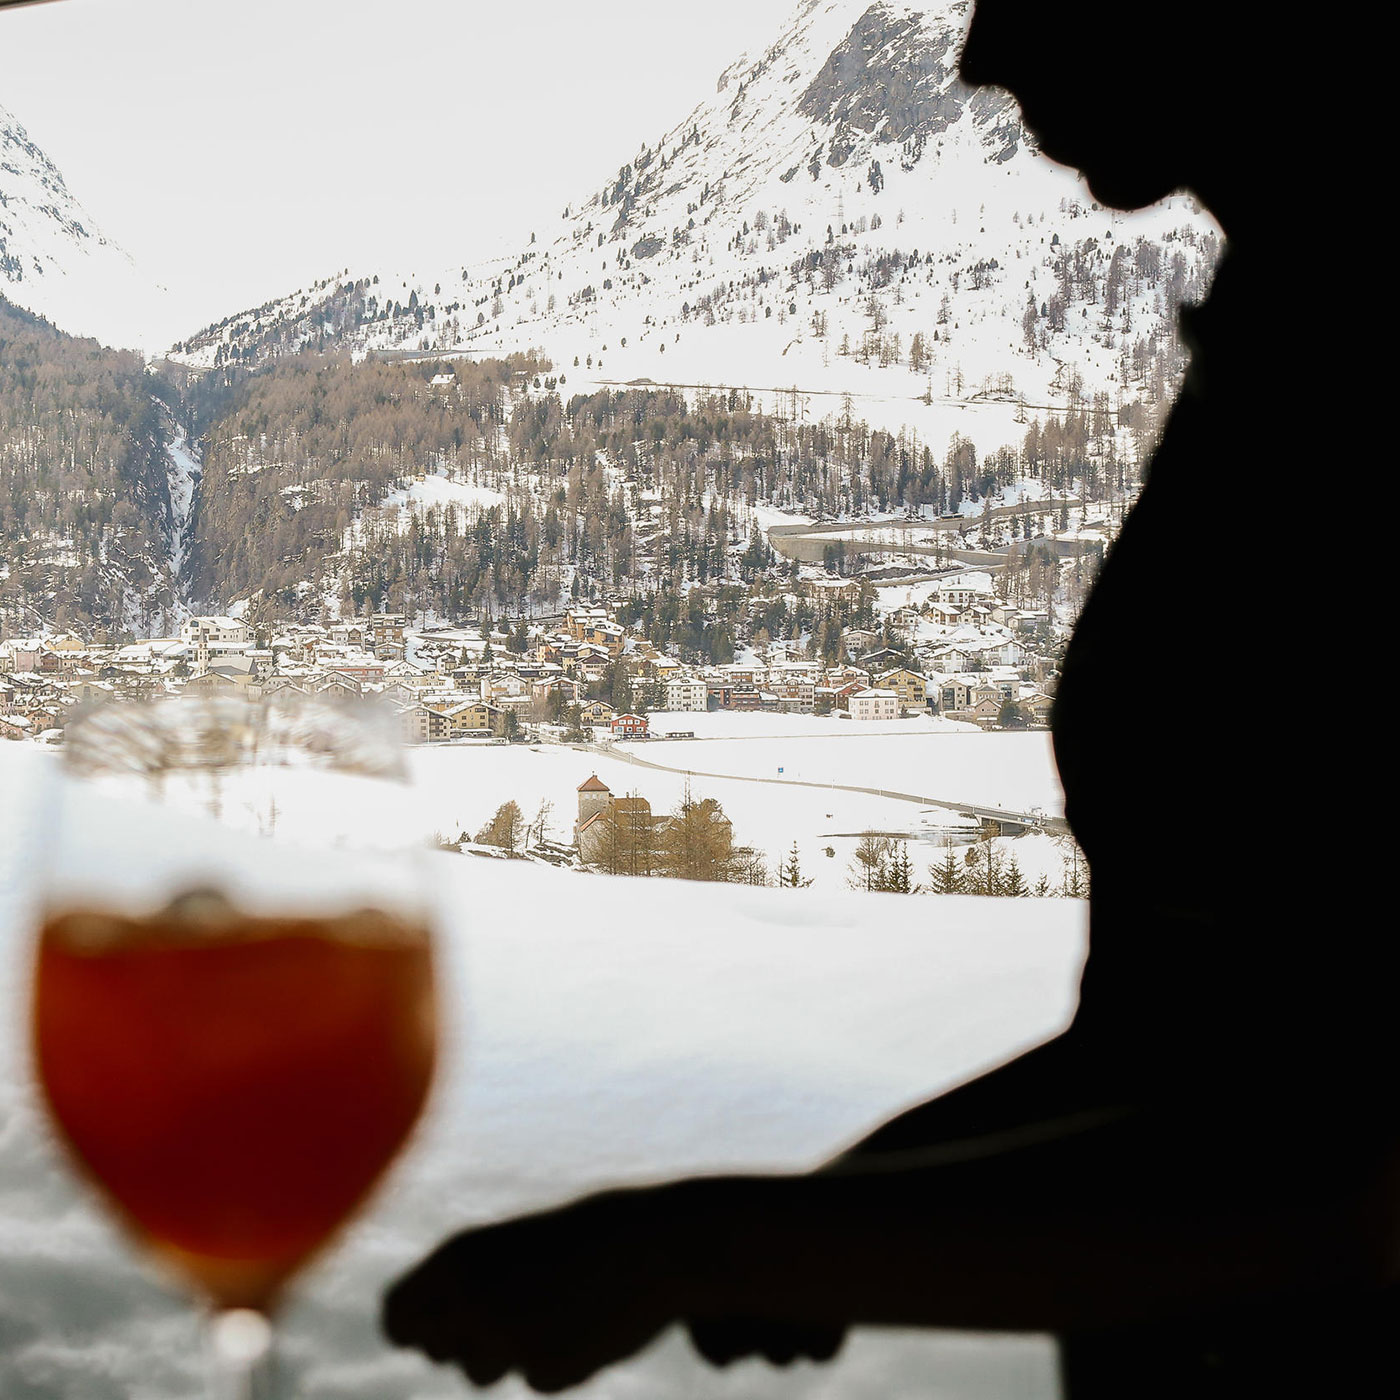 Frau serviert Drink vor Bergkulisse